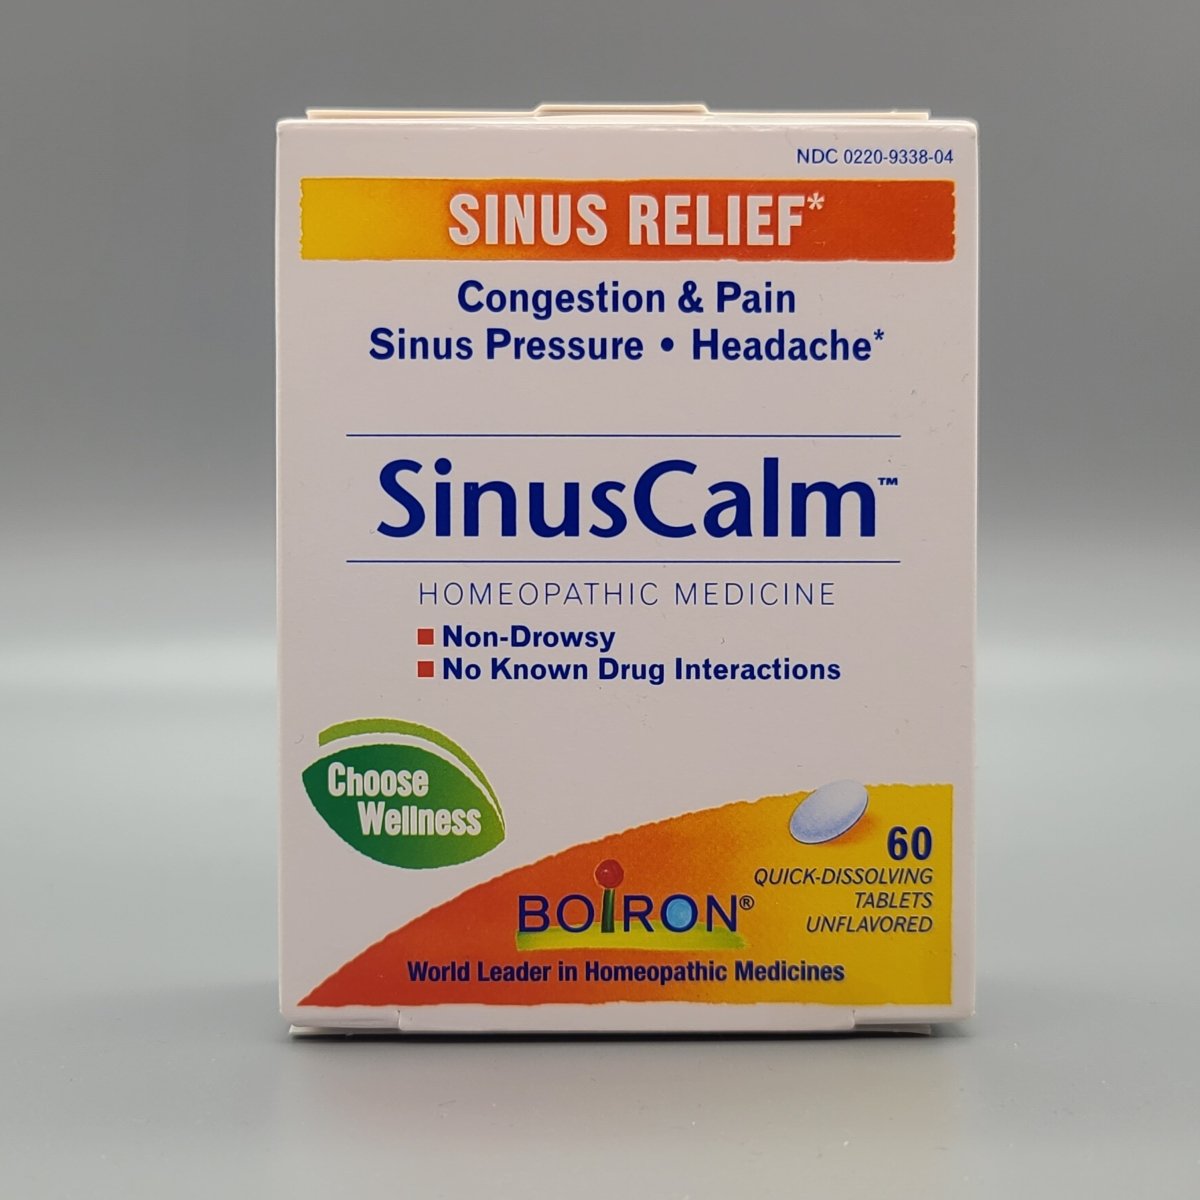 SinusCalm - Sinusalia - Sinus Relief - 60 Tablets